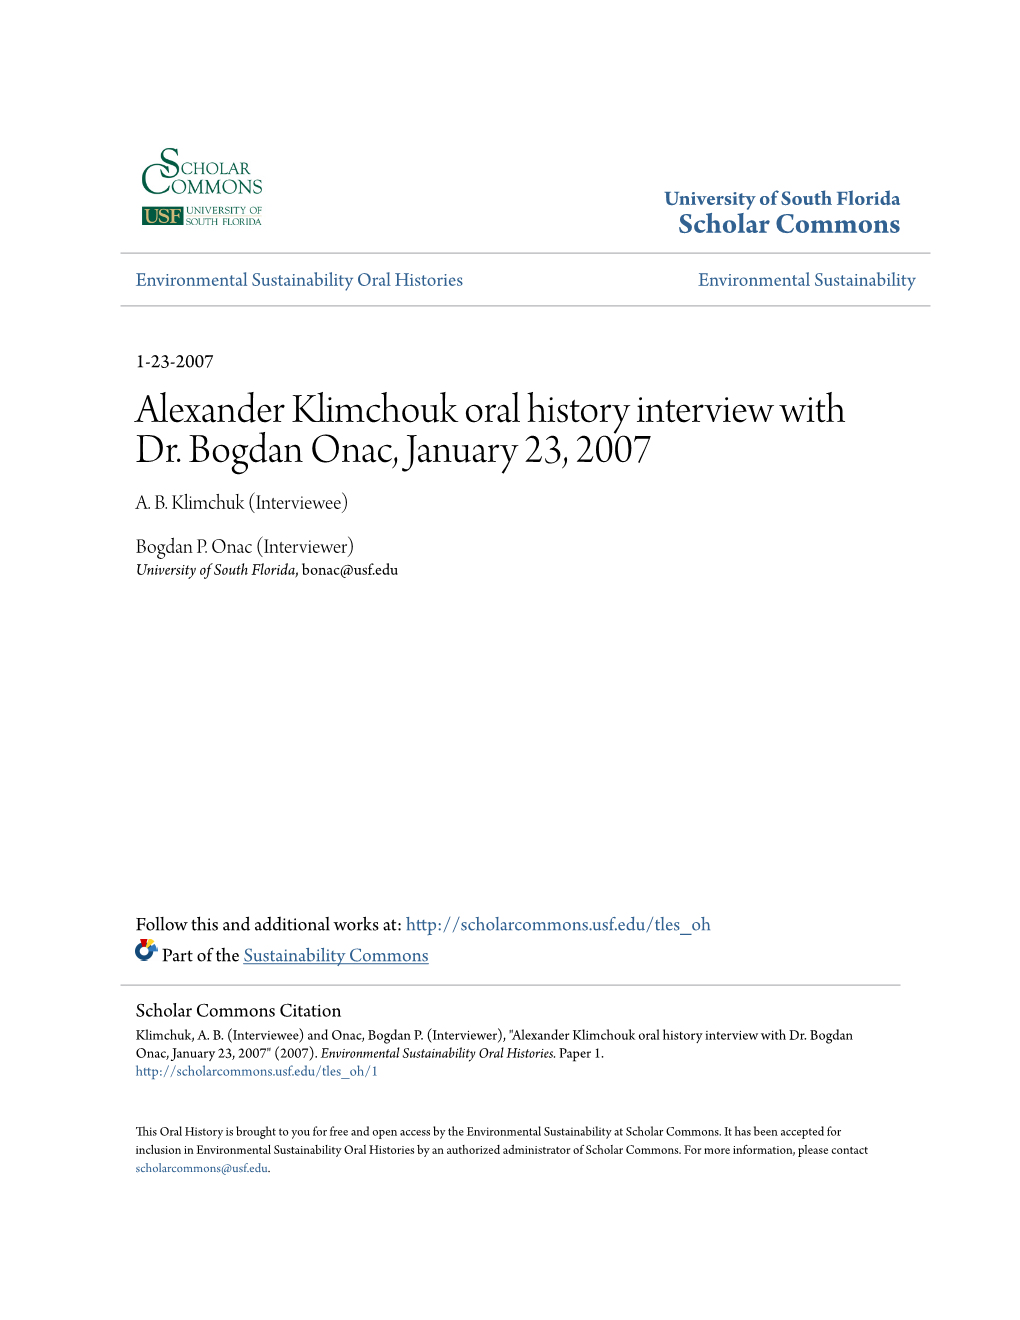 Alexander Klimchouk Oral History Interview with Dr. Bogdan Onac, January 23, 2007 A